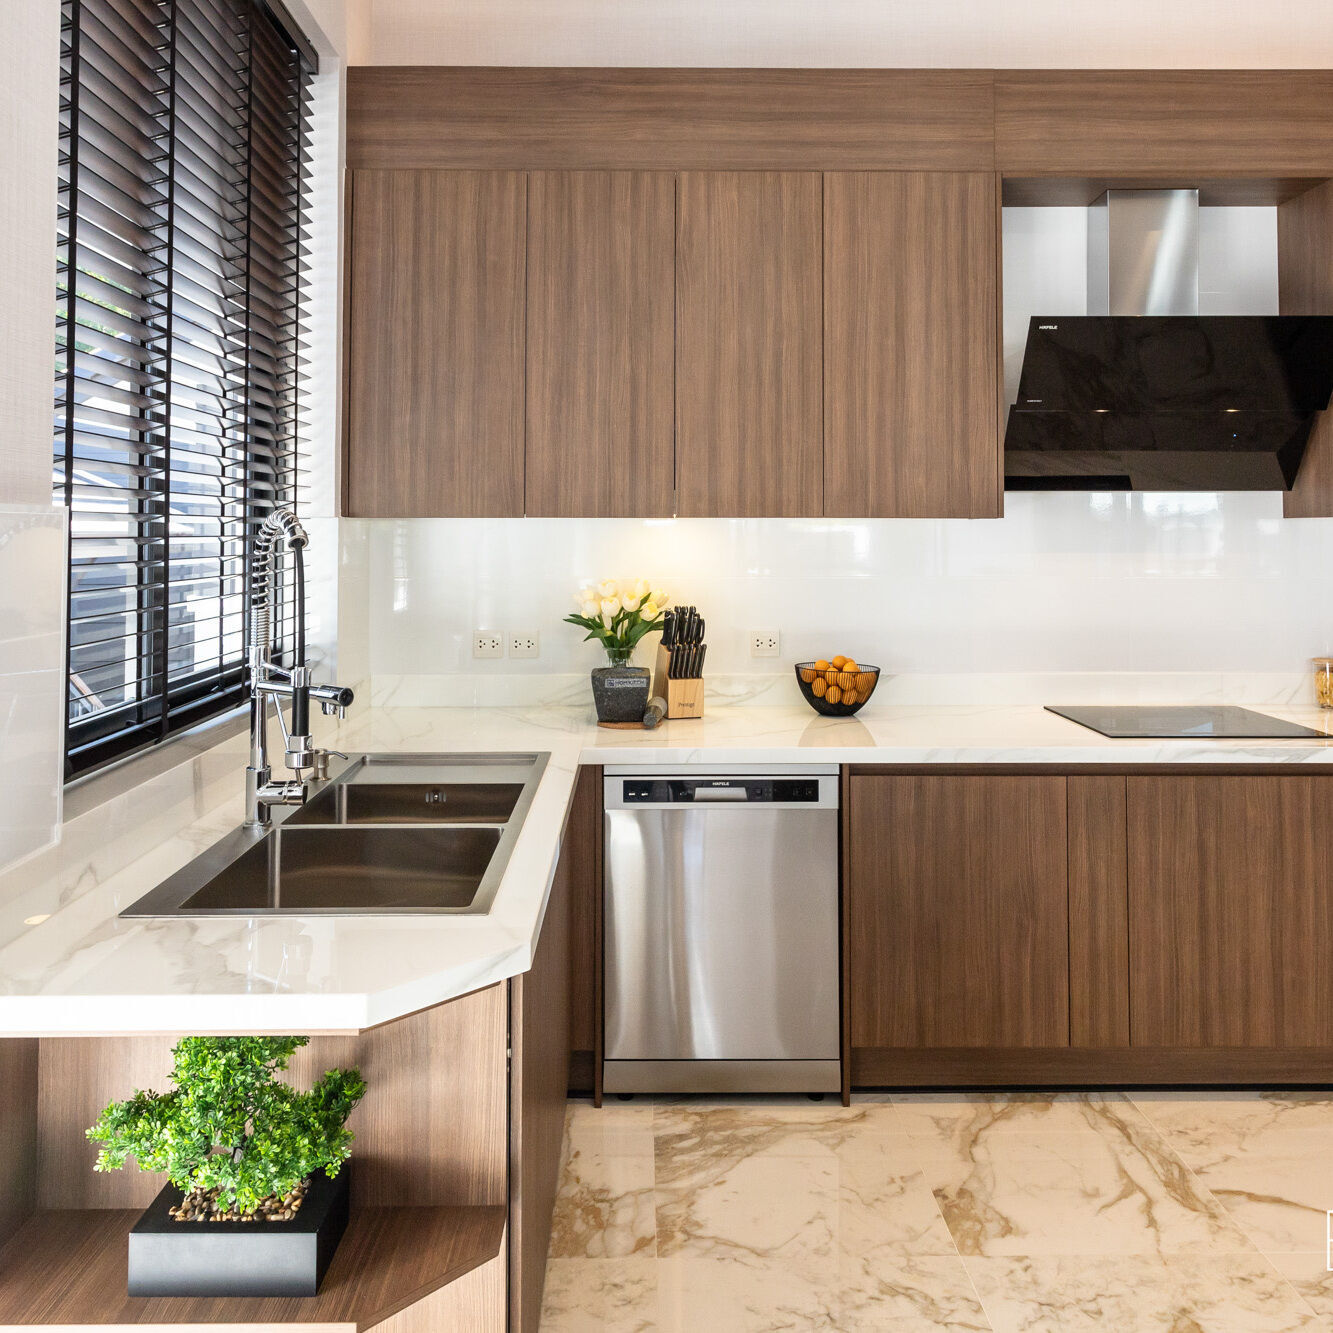 Lifestyle series kitchen. Wood pattern melamine finish with modern look.